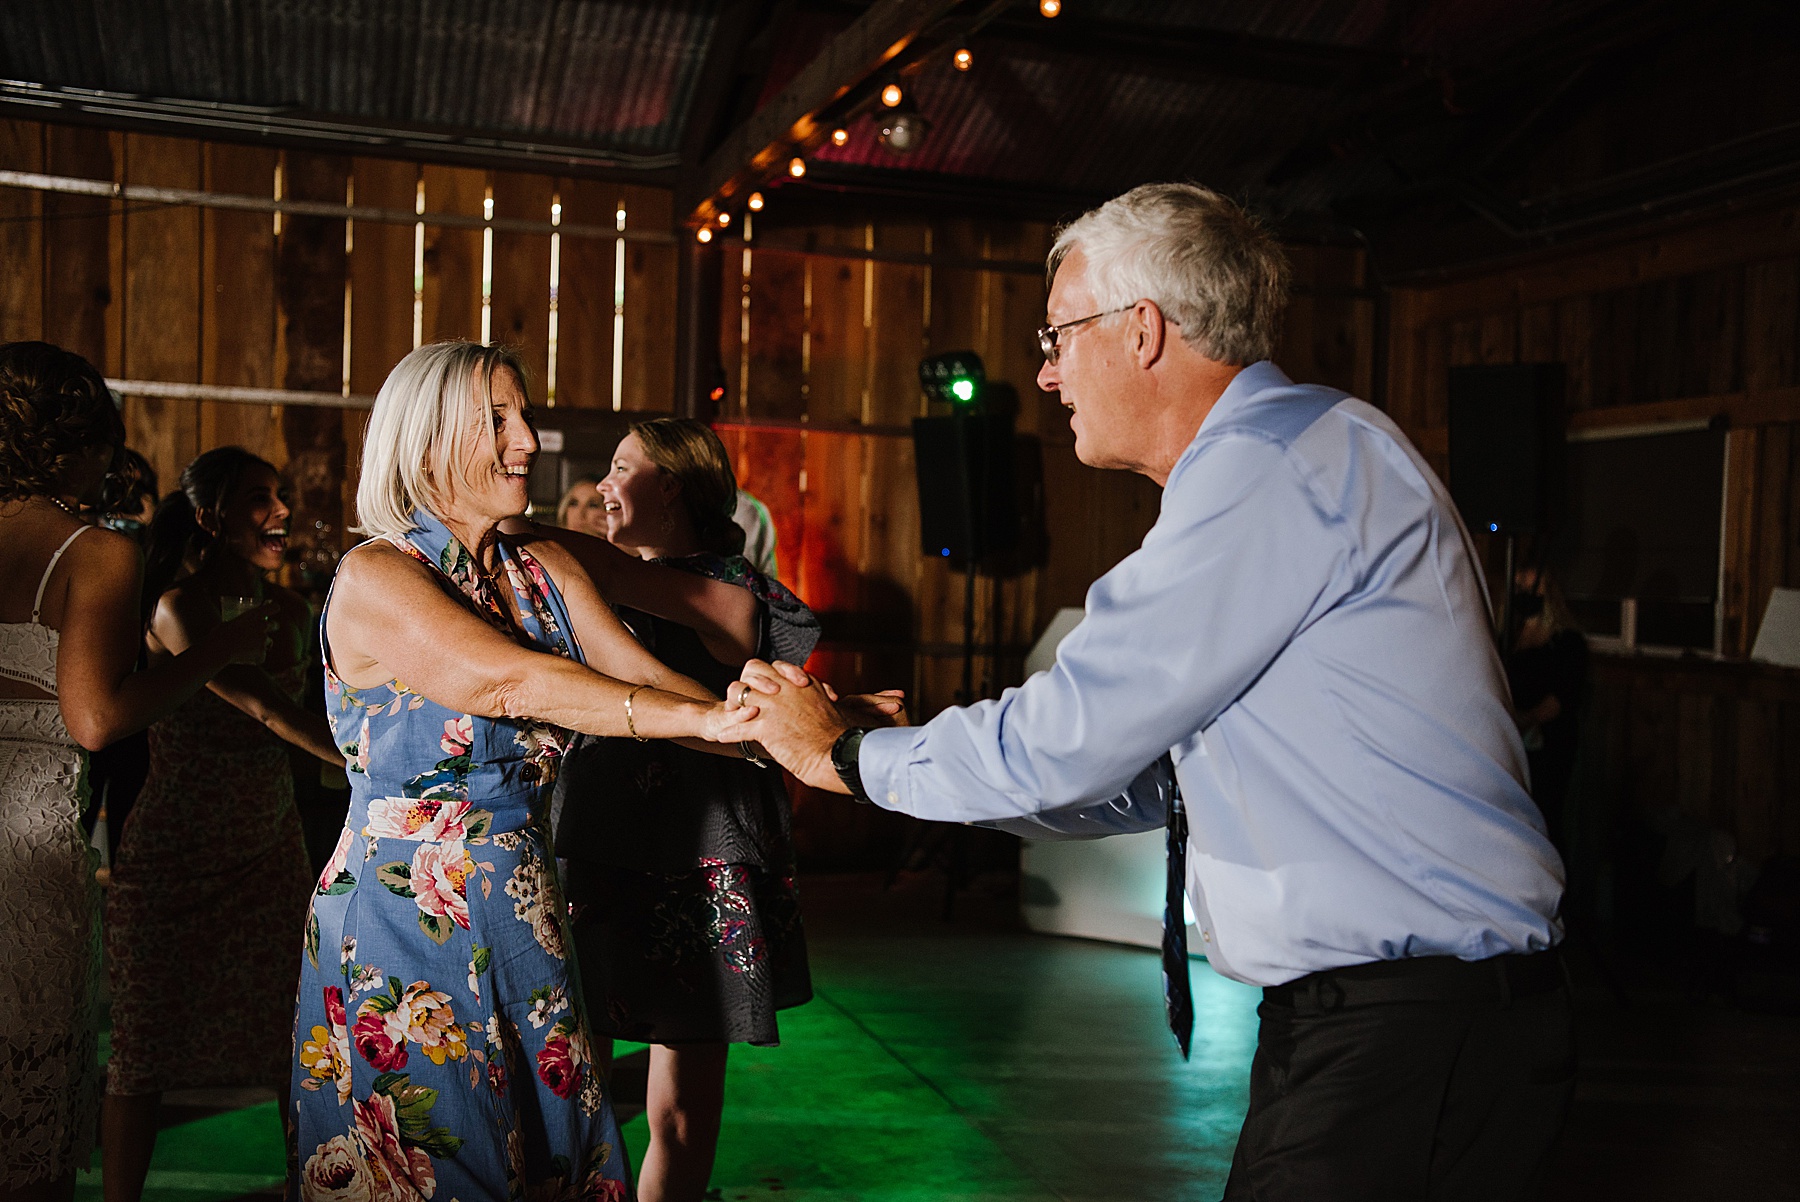 Oyster Ridge Summer Wedding Reception - The Brennan's